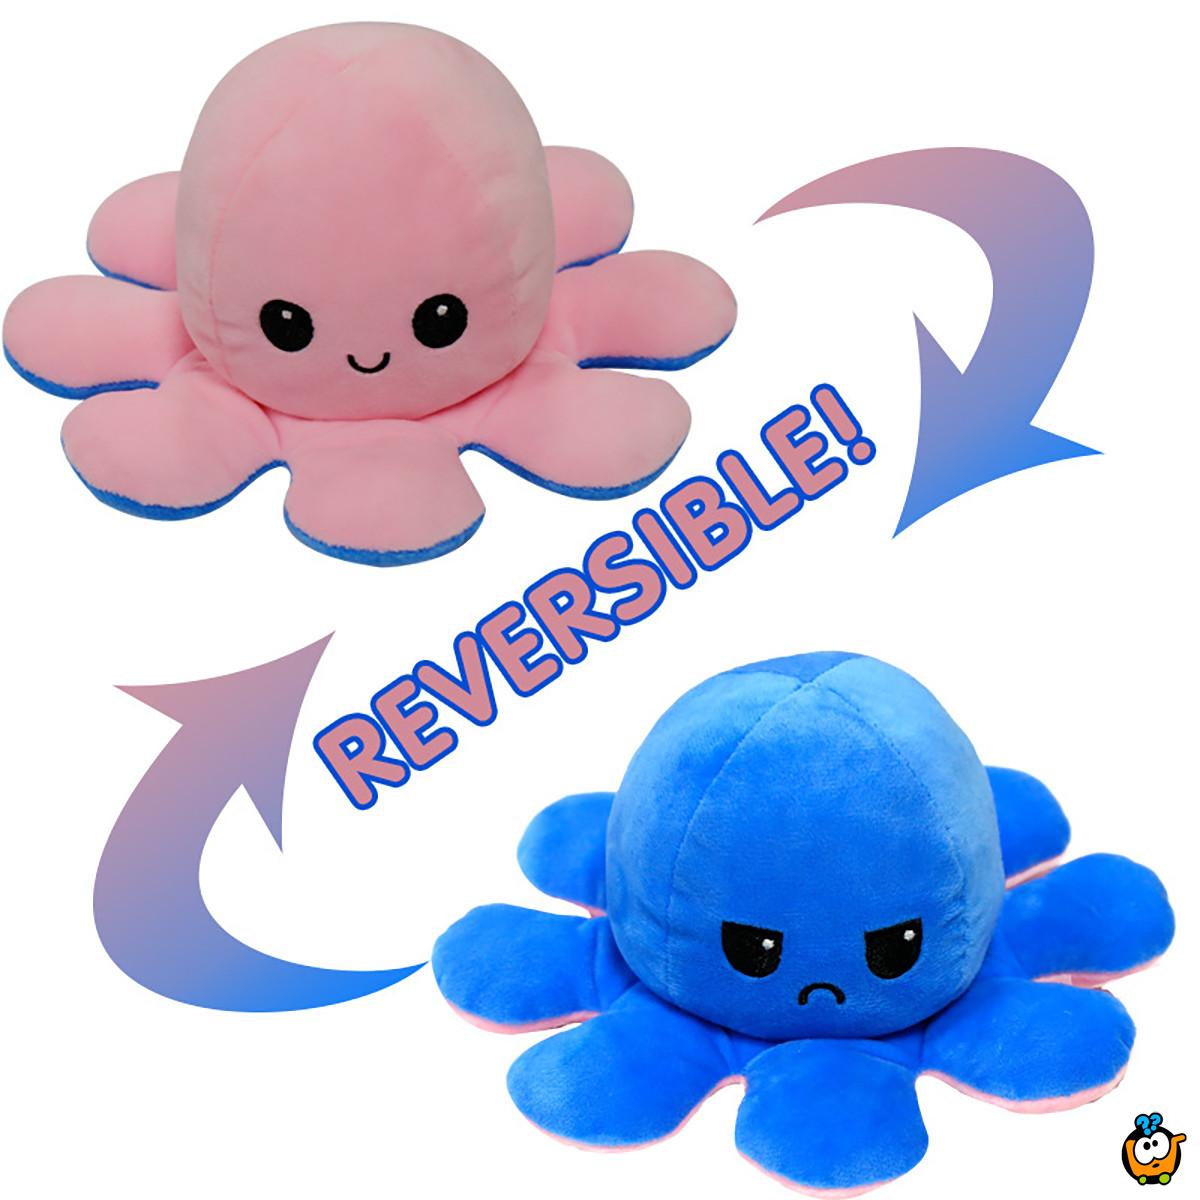 Reversible Octopus - Plišana hobotnica sa dva lica